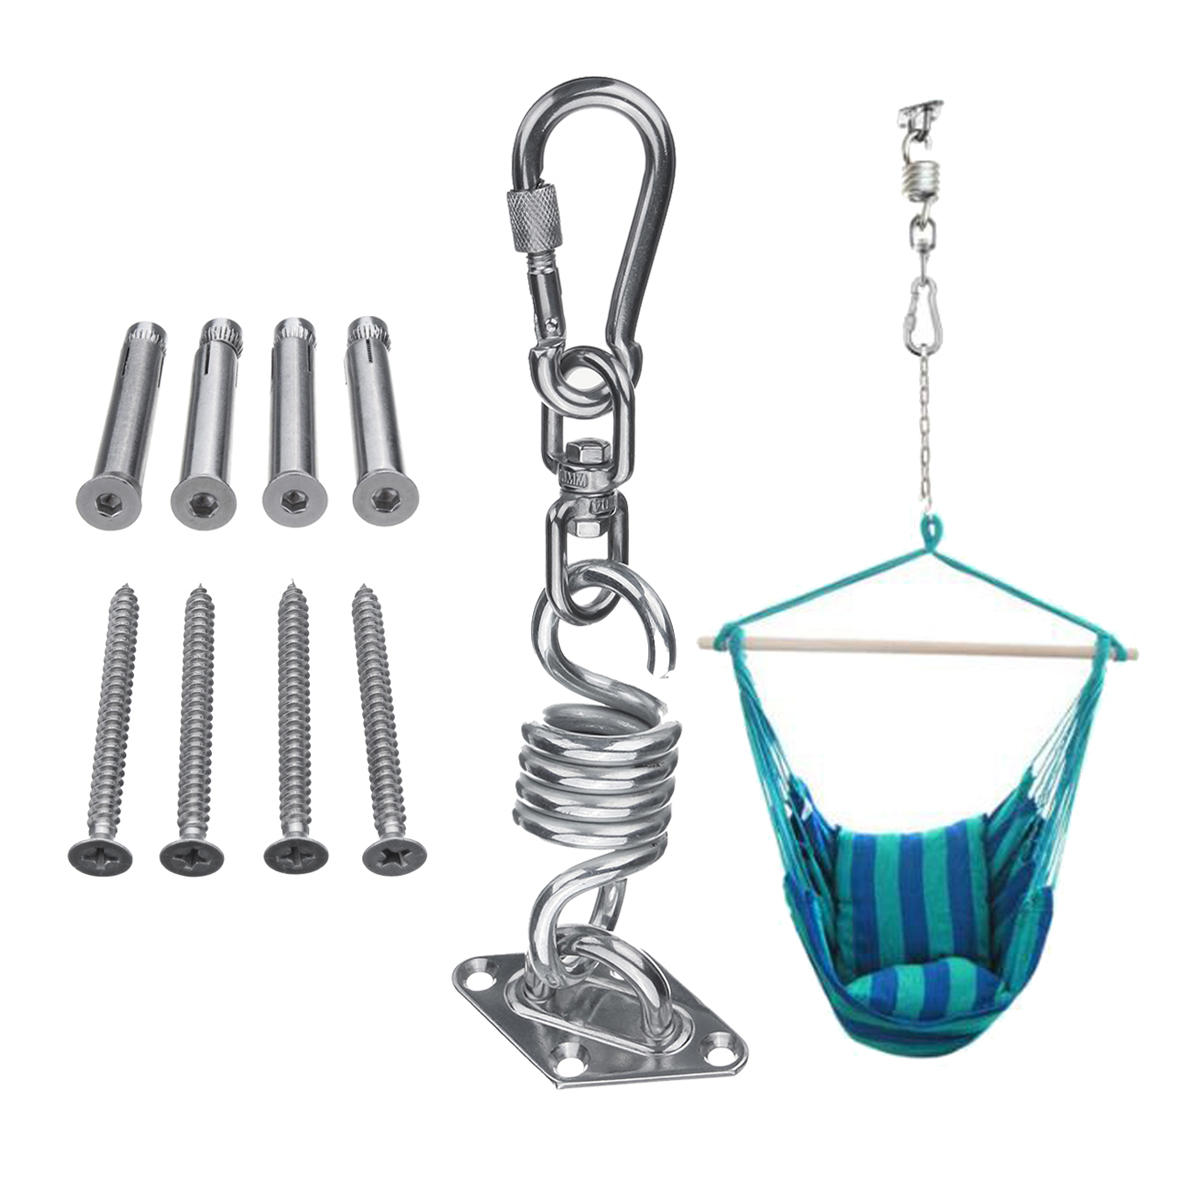 Stainless Steel Hammock Chair Hanging Kit  Ceiling Mount Spring Swivel Snap Hook Accessories